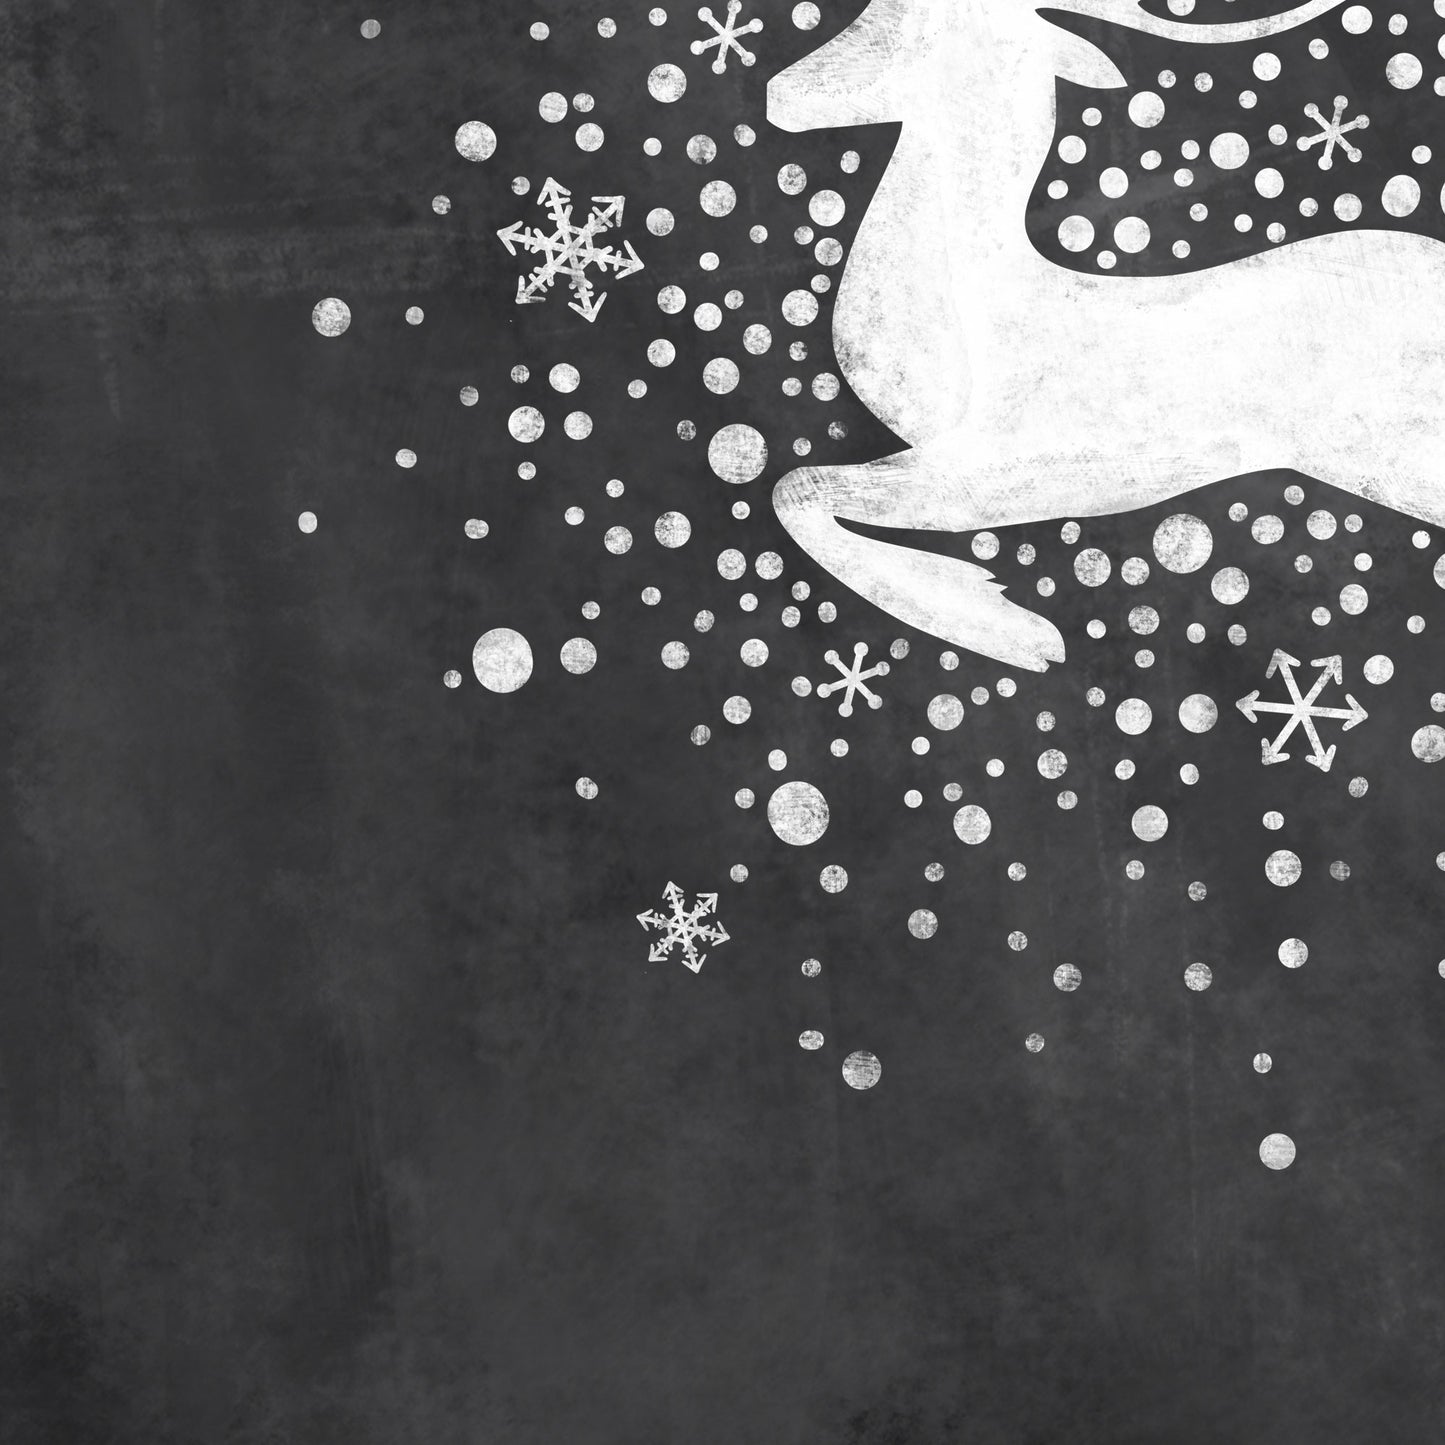 Distressed Reindeer Chalkboard Printable Up Cose Details